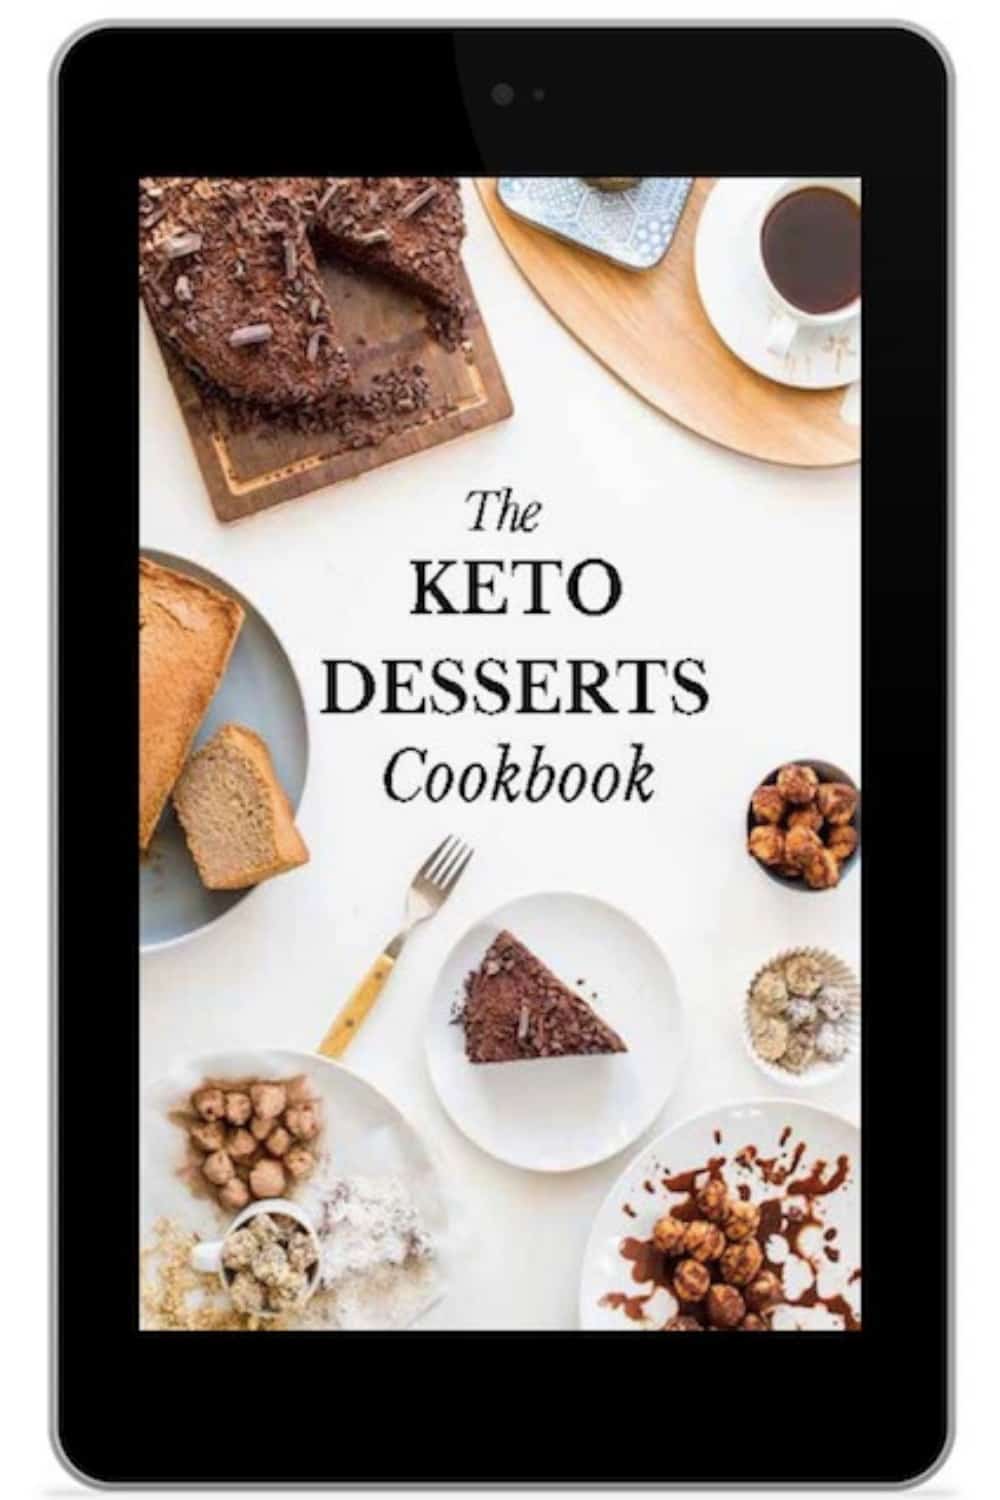 the keto desserts cookbook on iPad